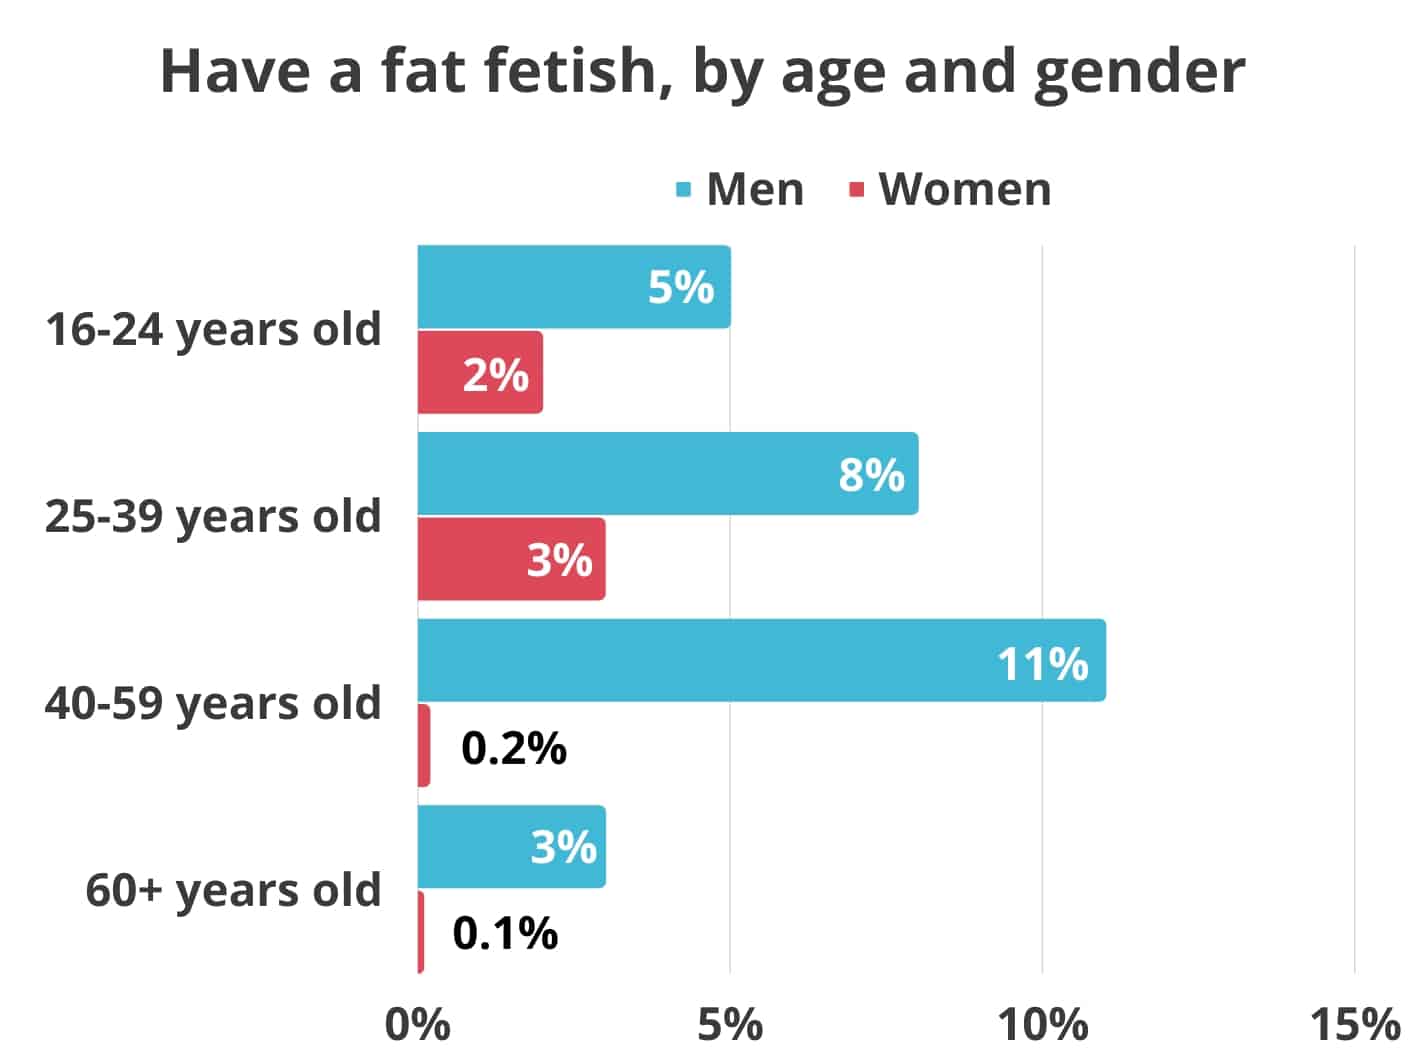 Fat fetish statistics